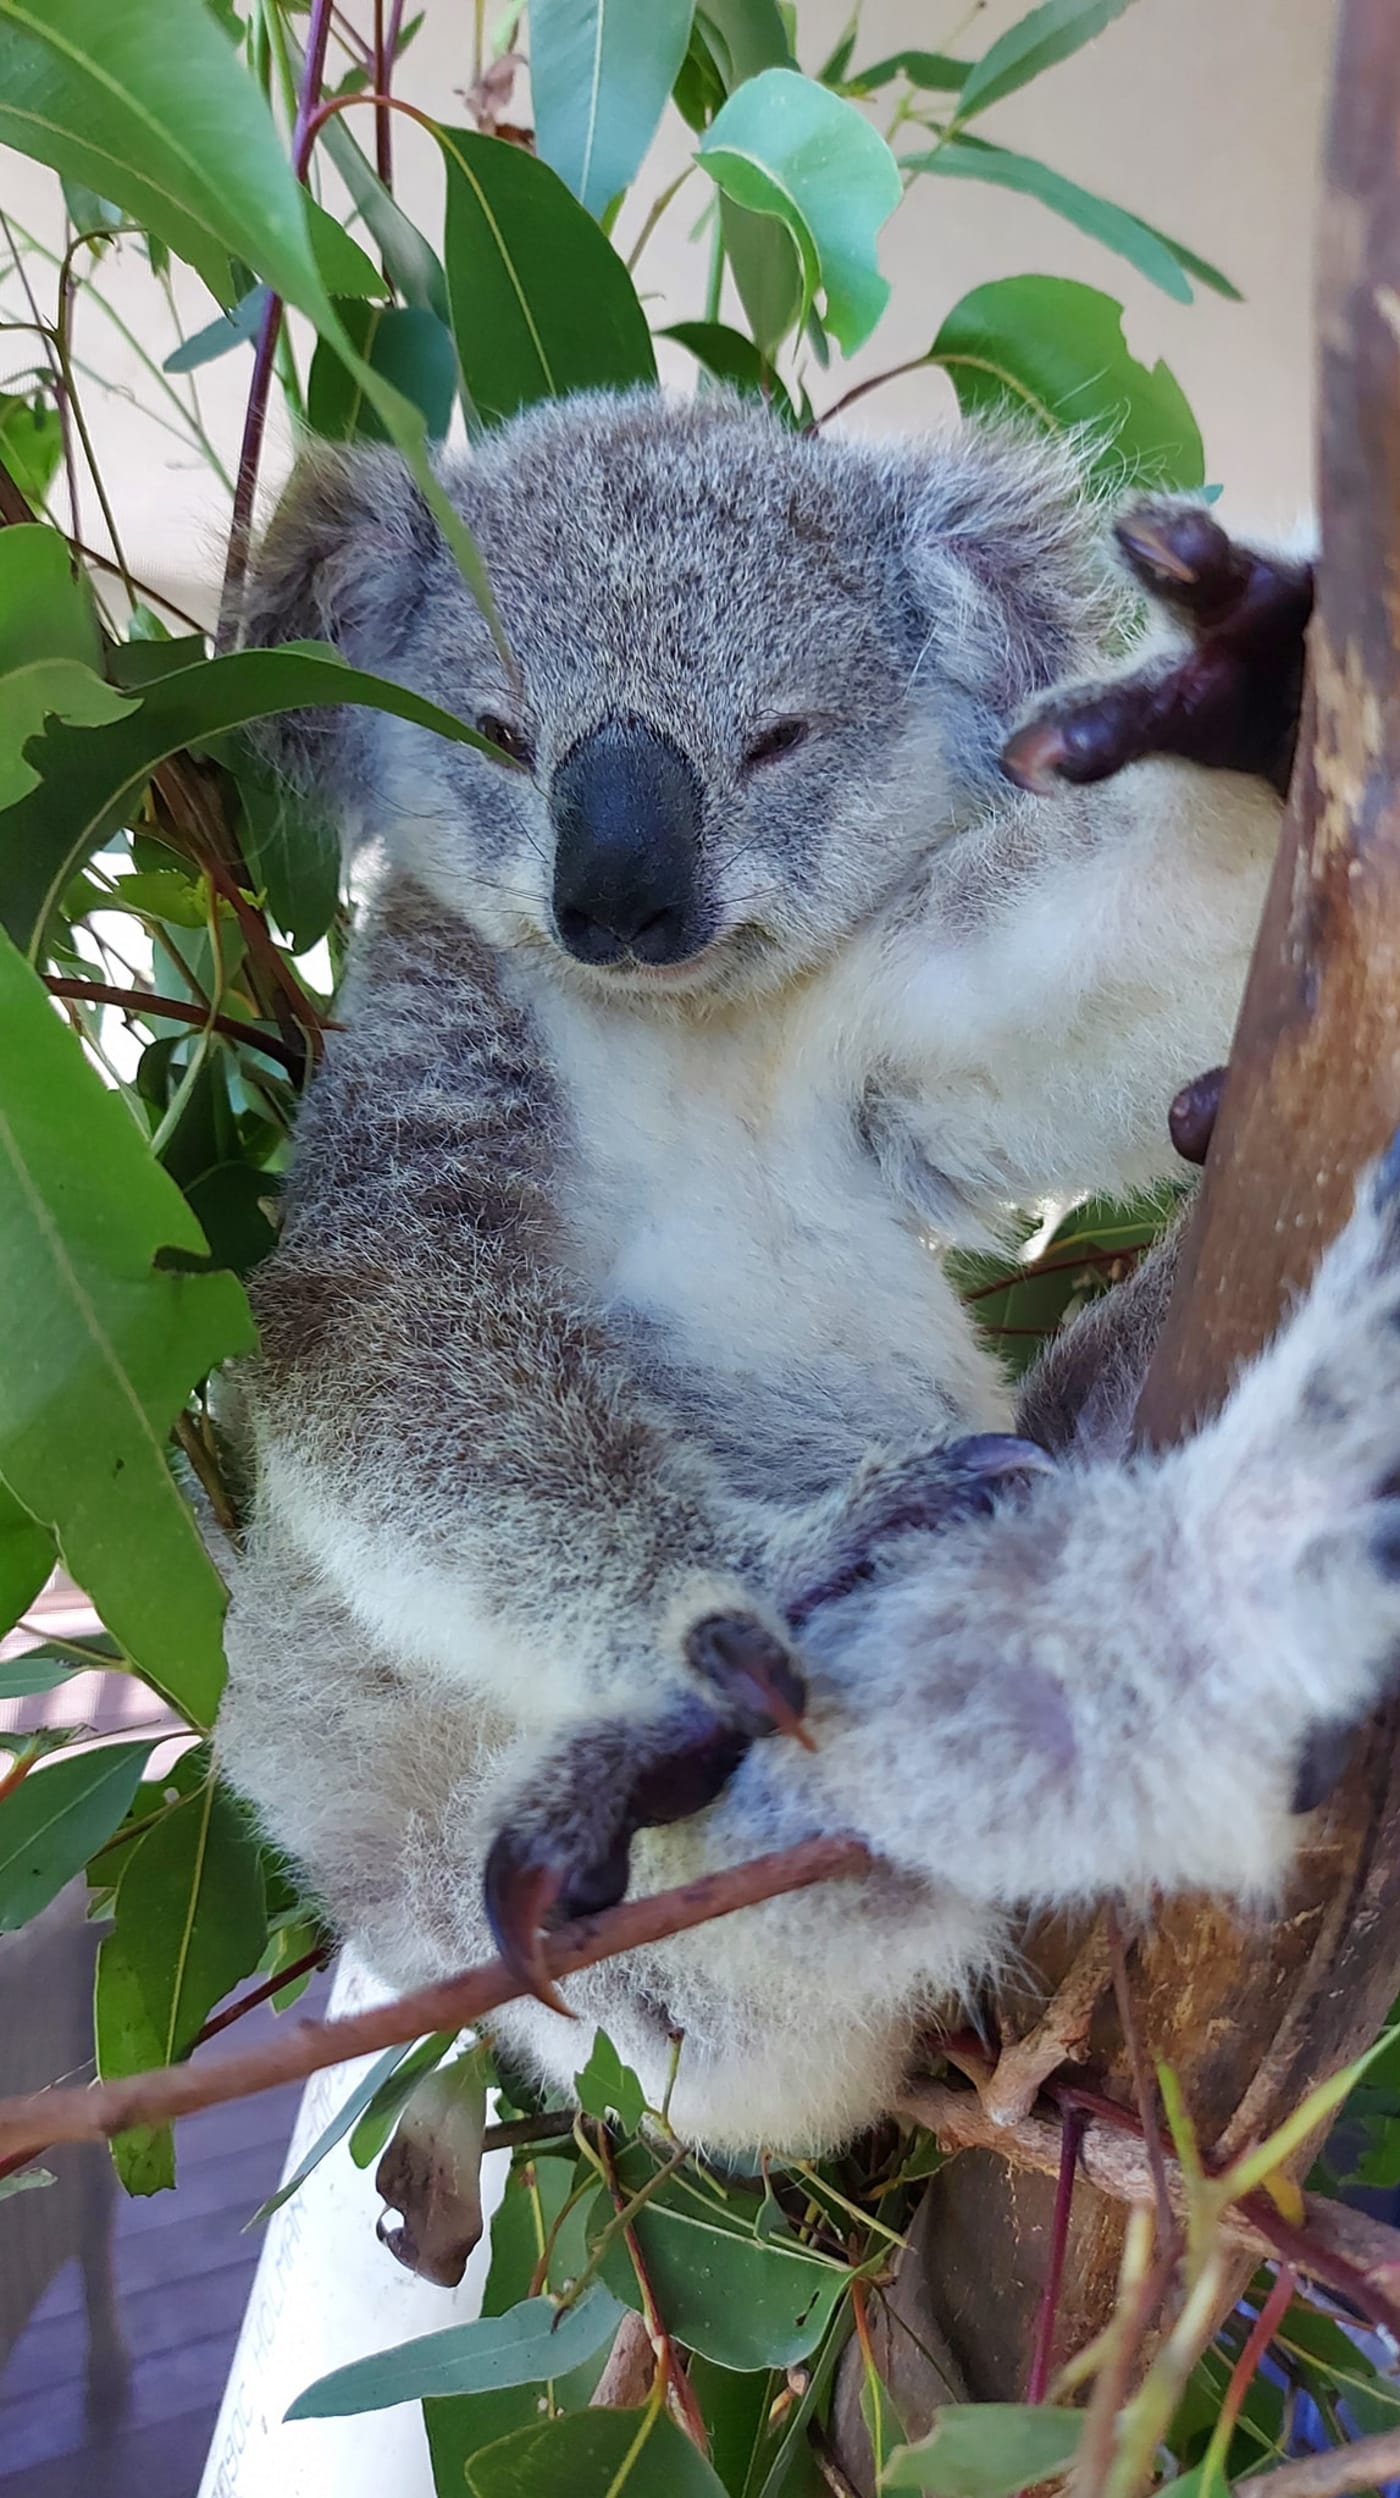 Raine the rescued koala Joey, dry and fed